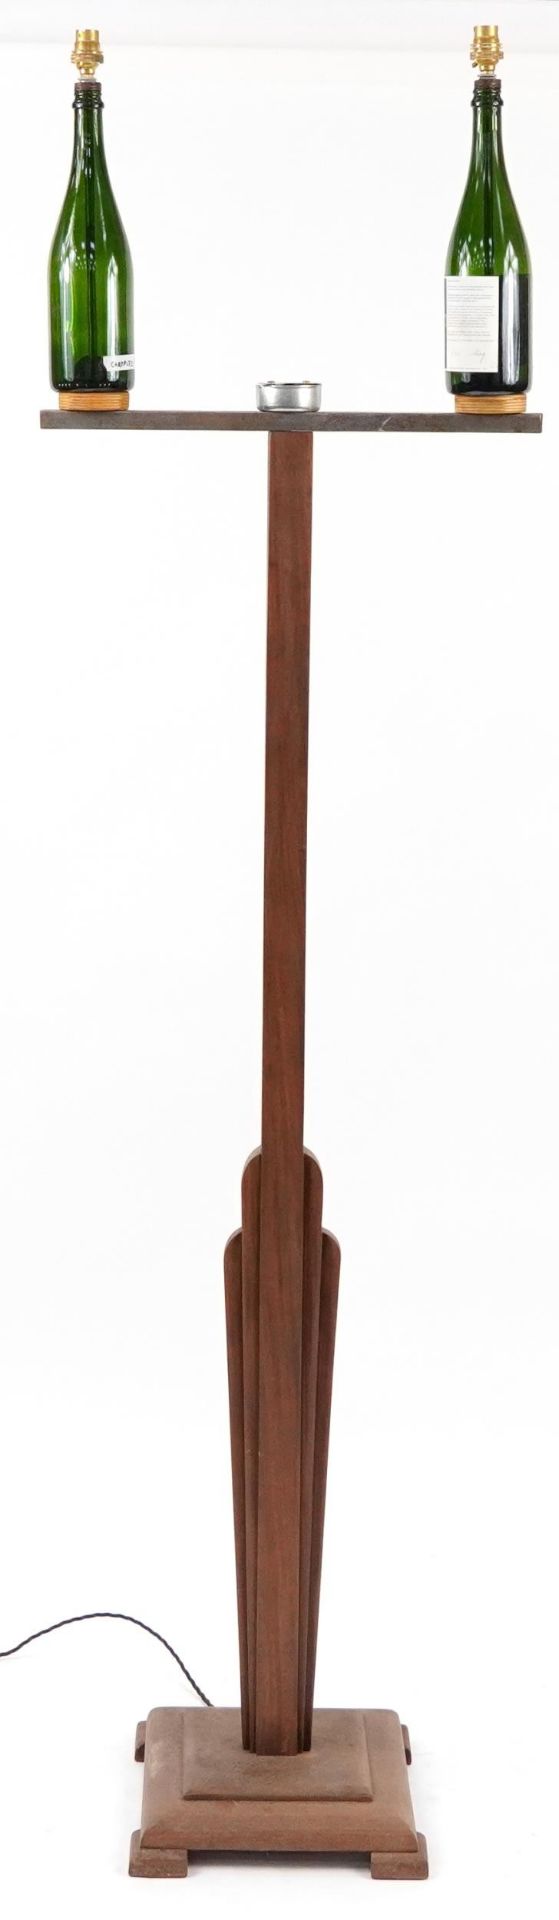 Carved oak and champagne bottle standard lamp, 190cm high - Image 2 of 2